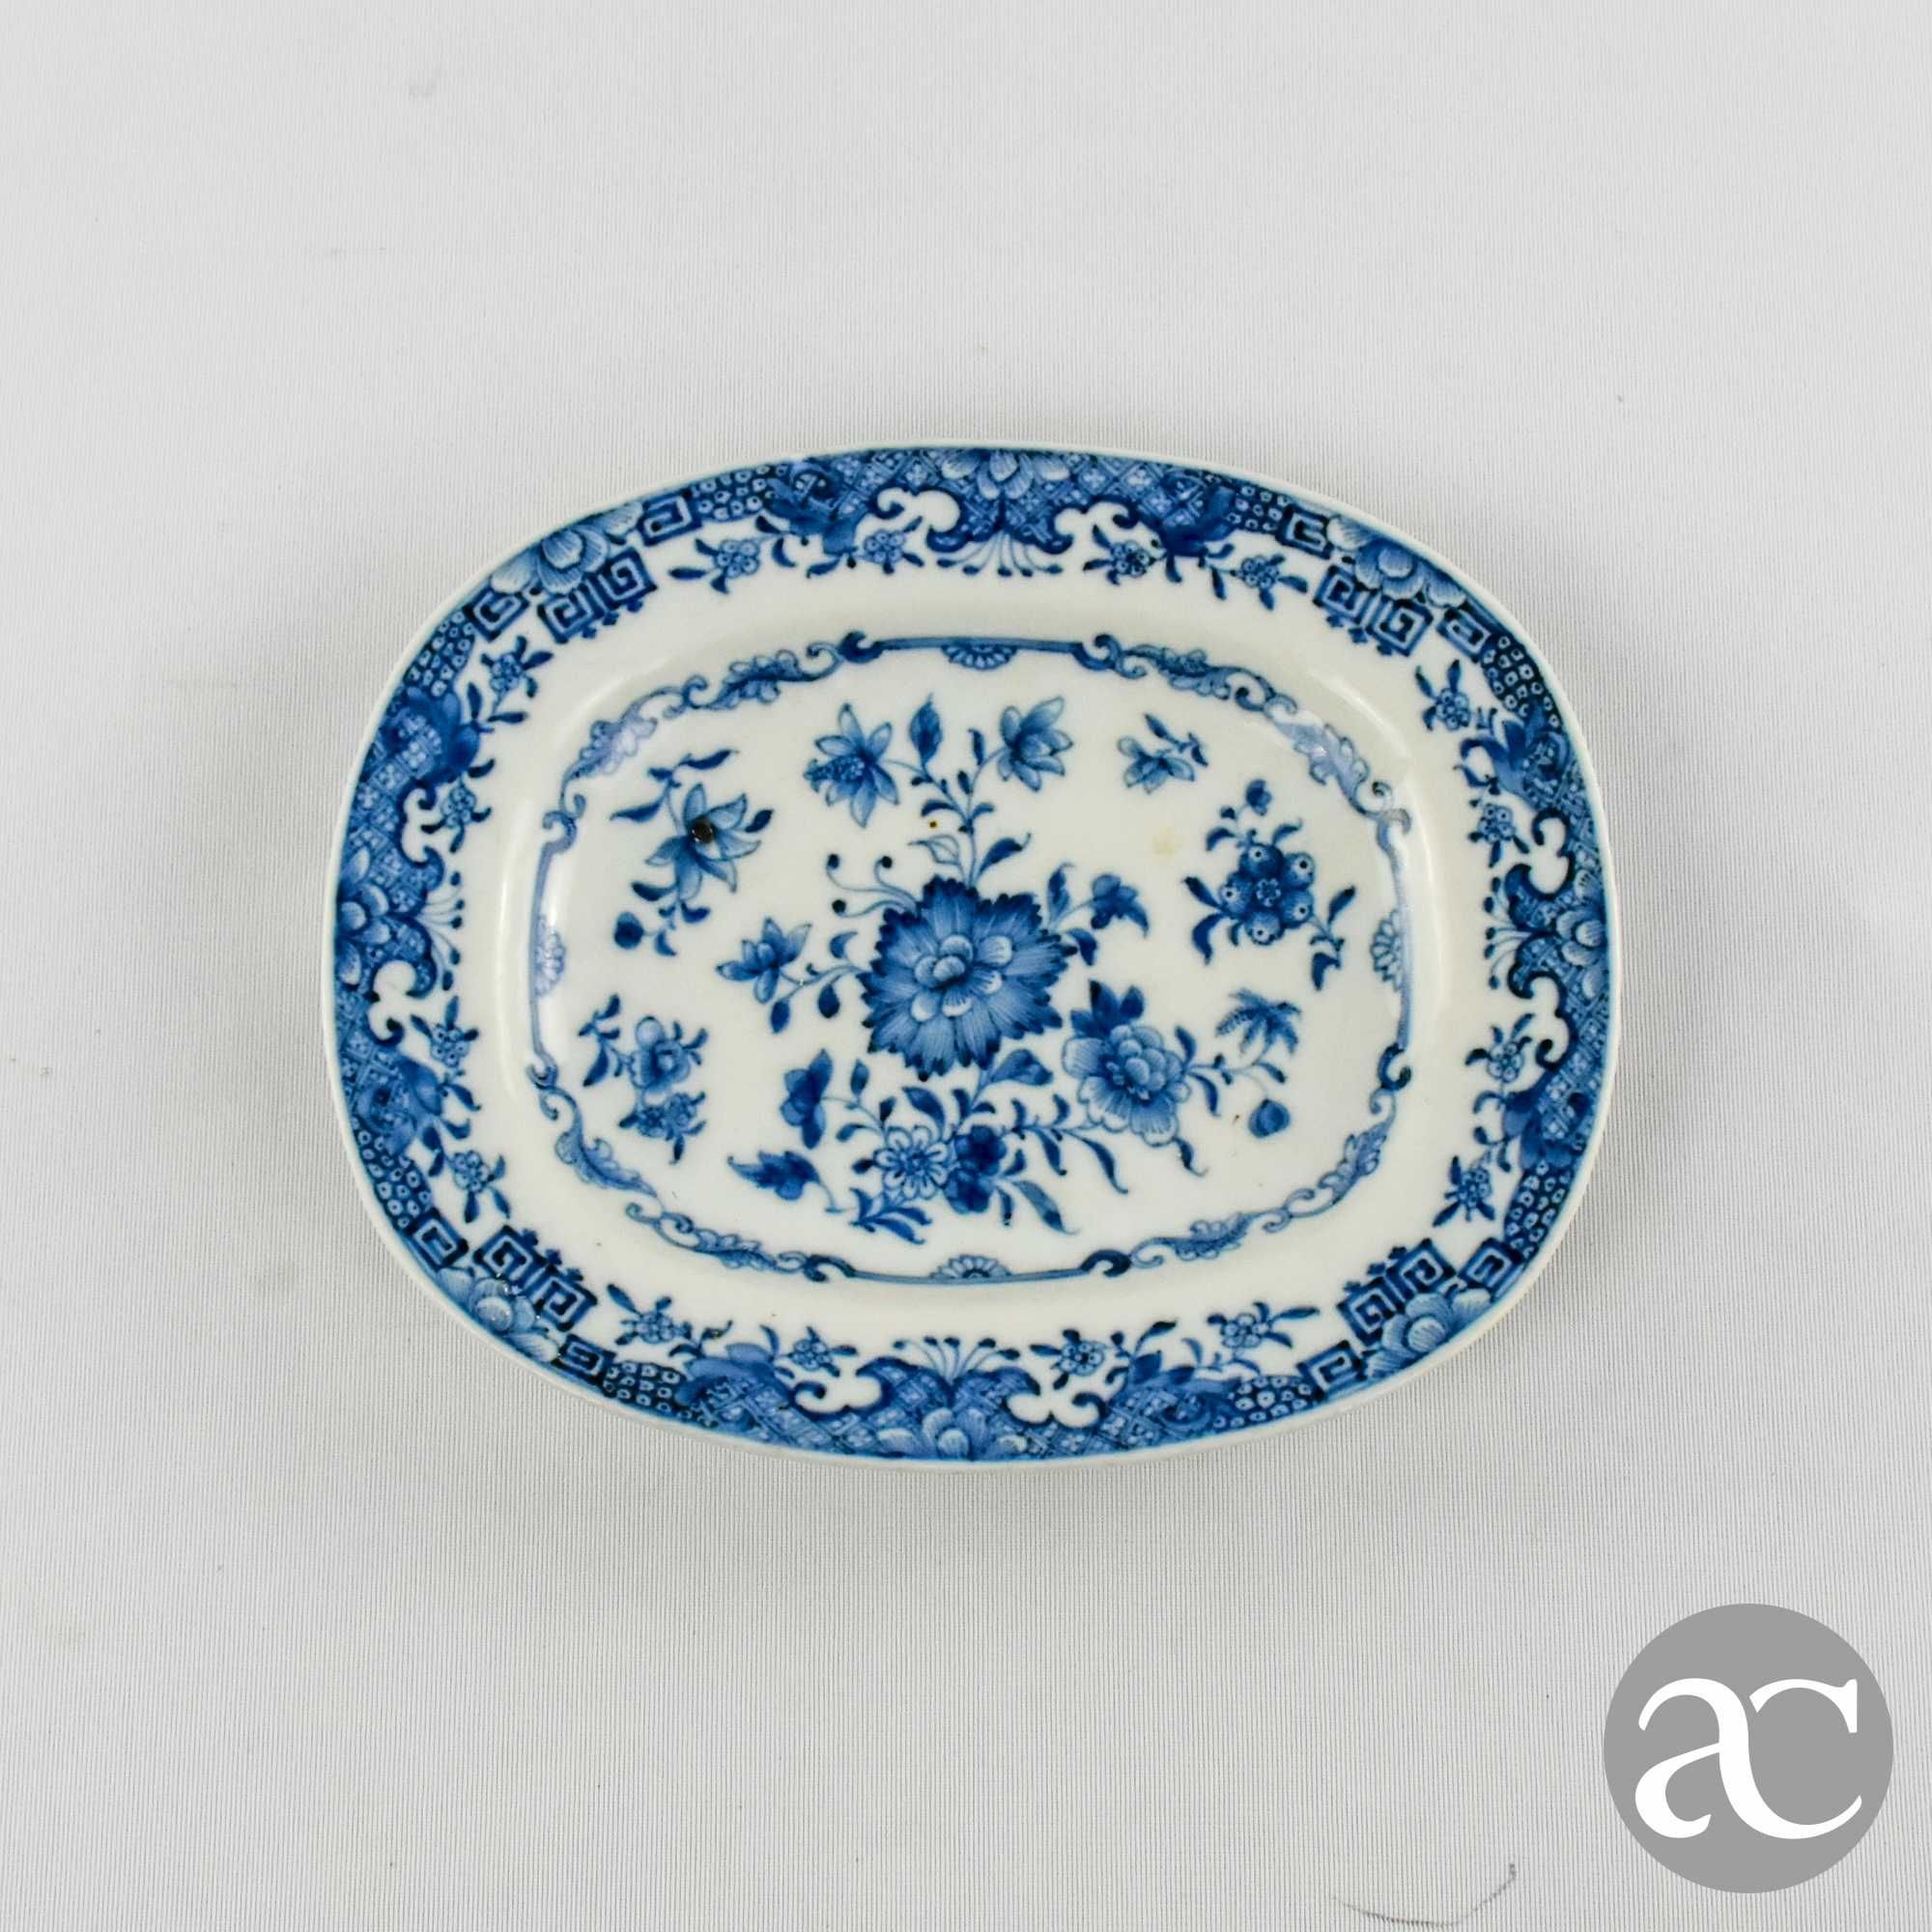 Pequena travessa, porcelana da China, Qianlong, séc. XVIII